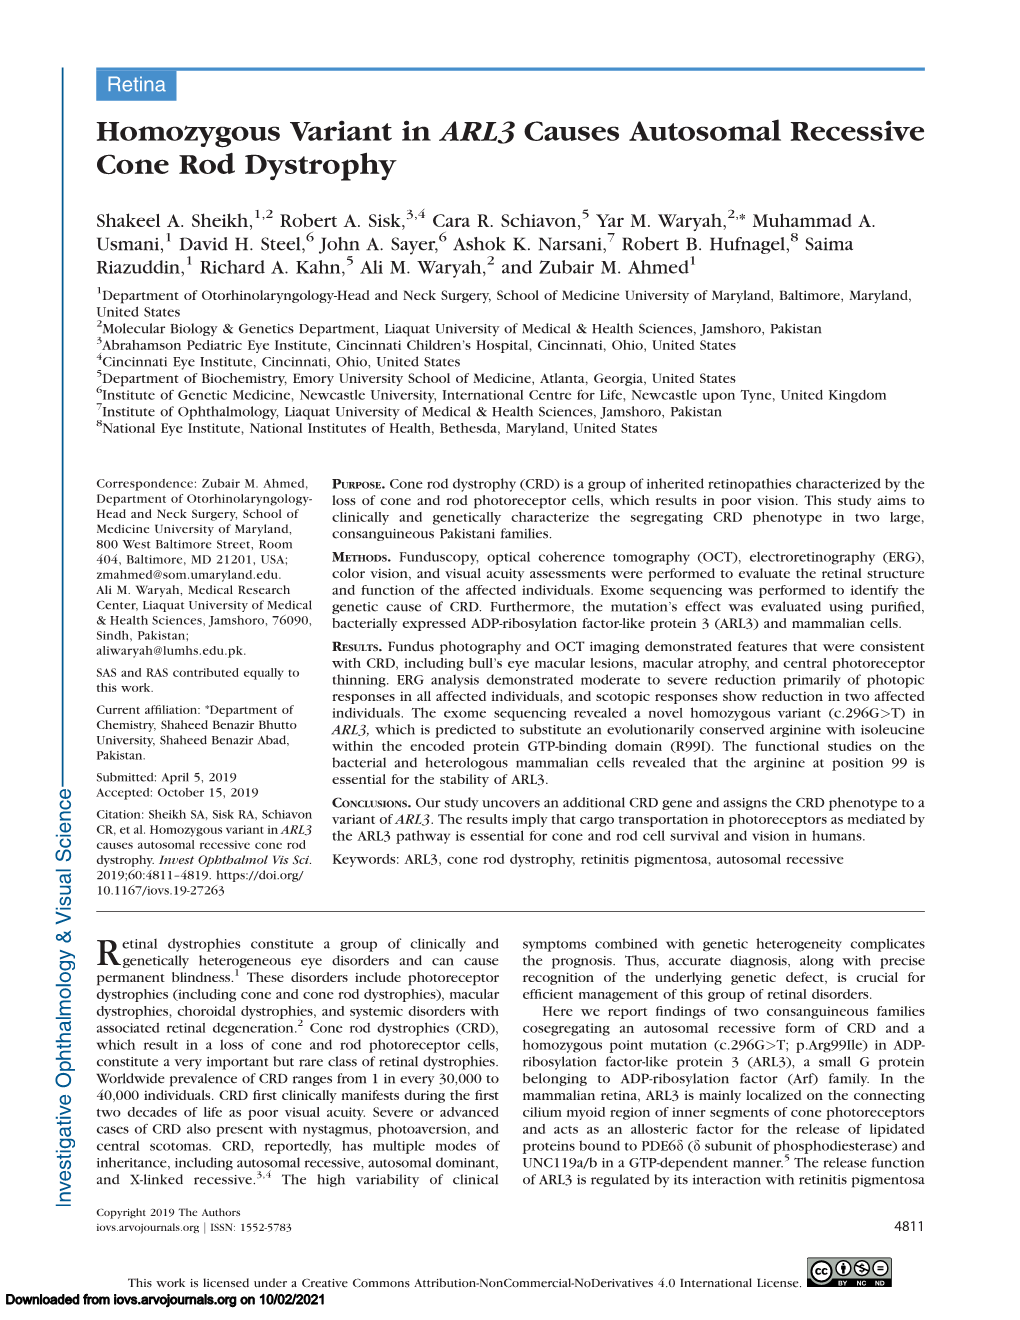 Homozygous Variant in ARL3 Causes Autosomal Recessive Cone Rod Dystrophy